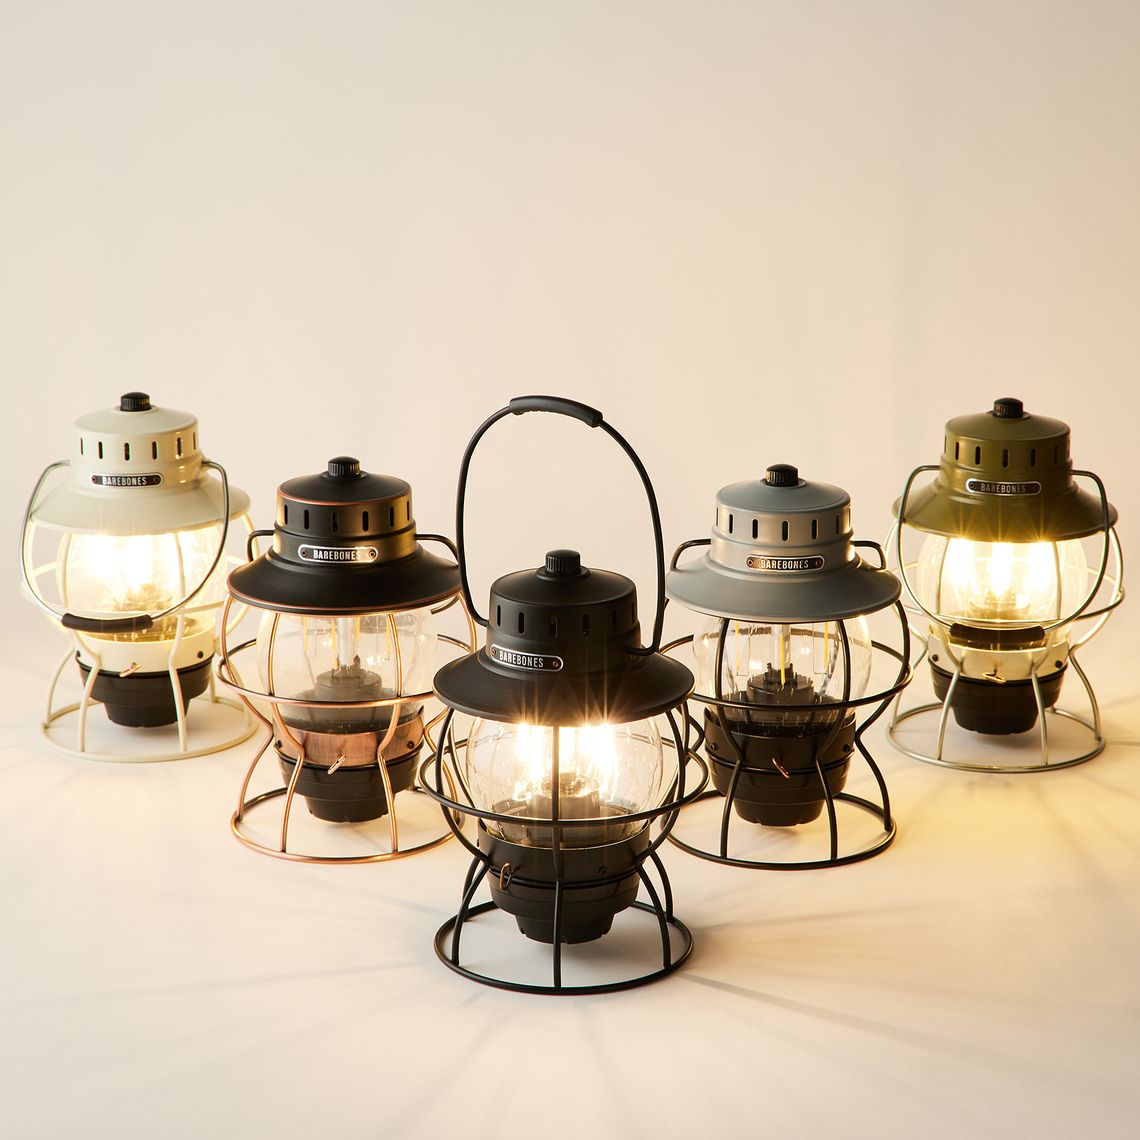 Lantern Vintage Railroad Lantern Lamp - Rare Finds Warehouse